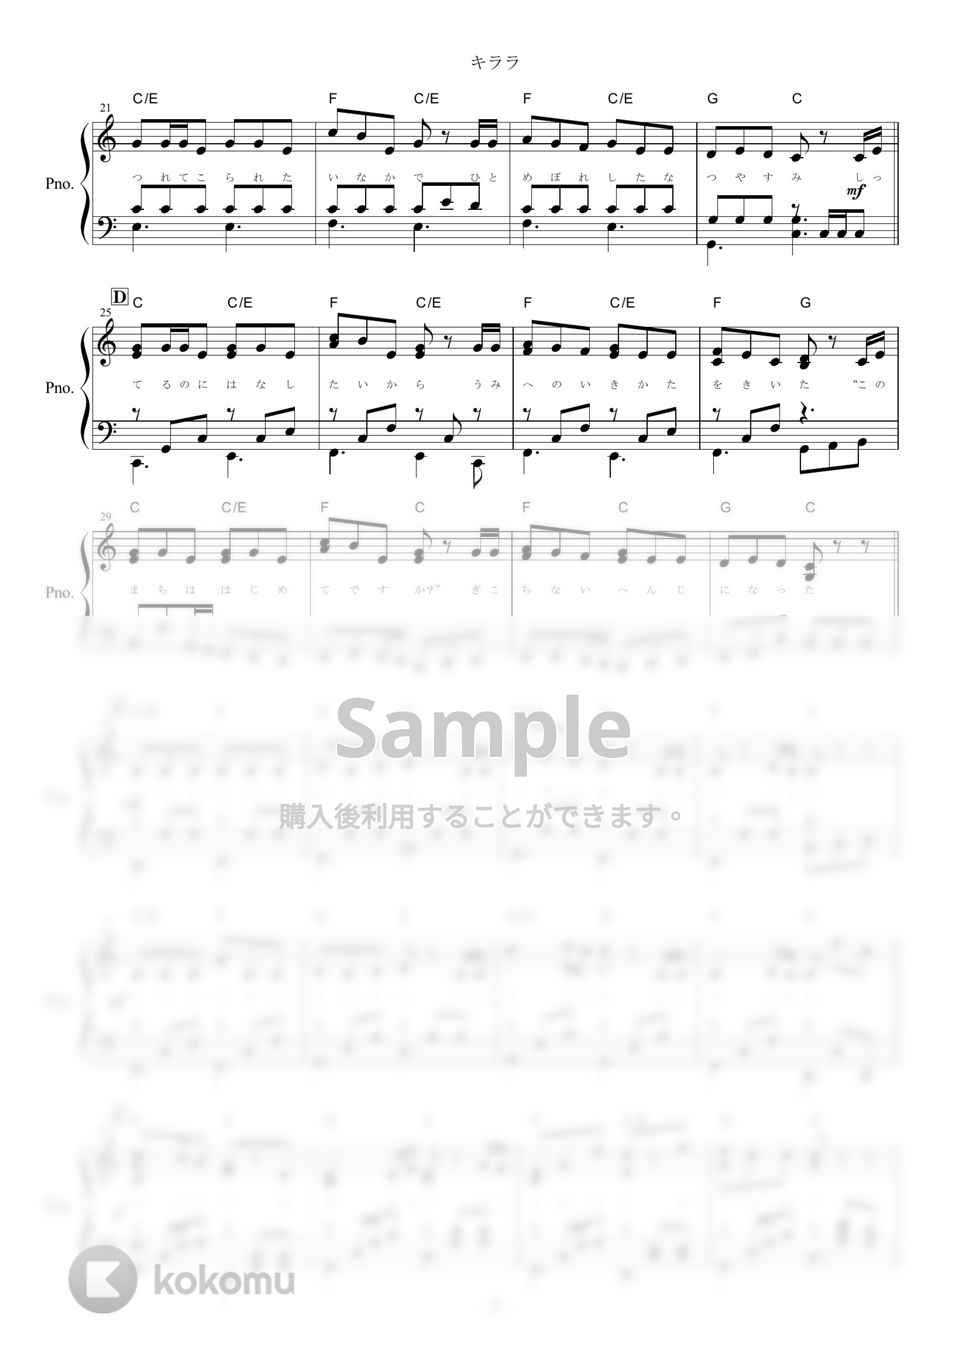 HoneyWorks - キララ (ピアノ楽譜/全６ページ) by yoshi